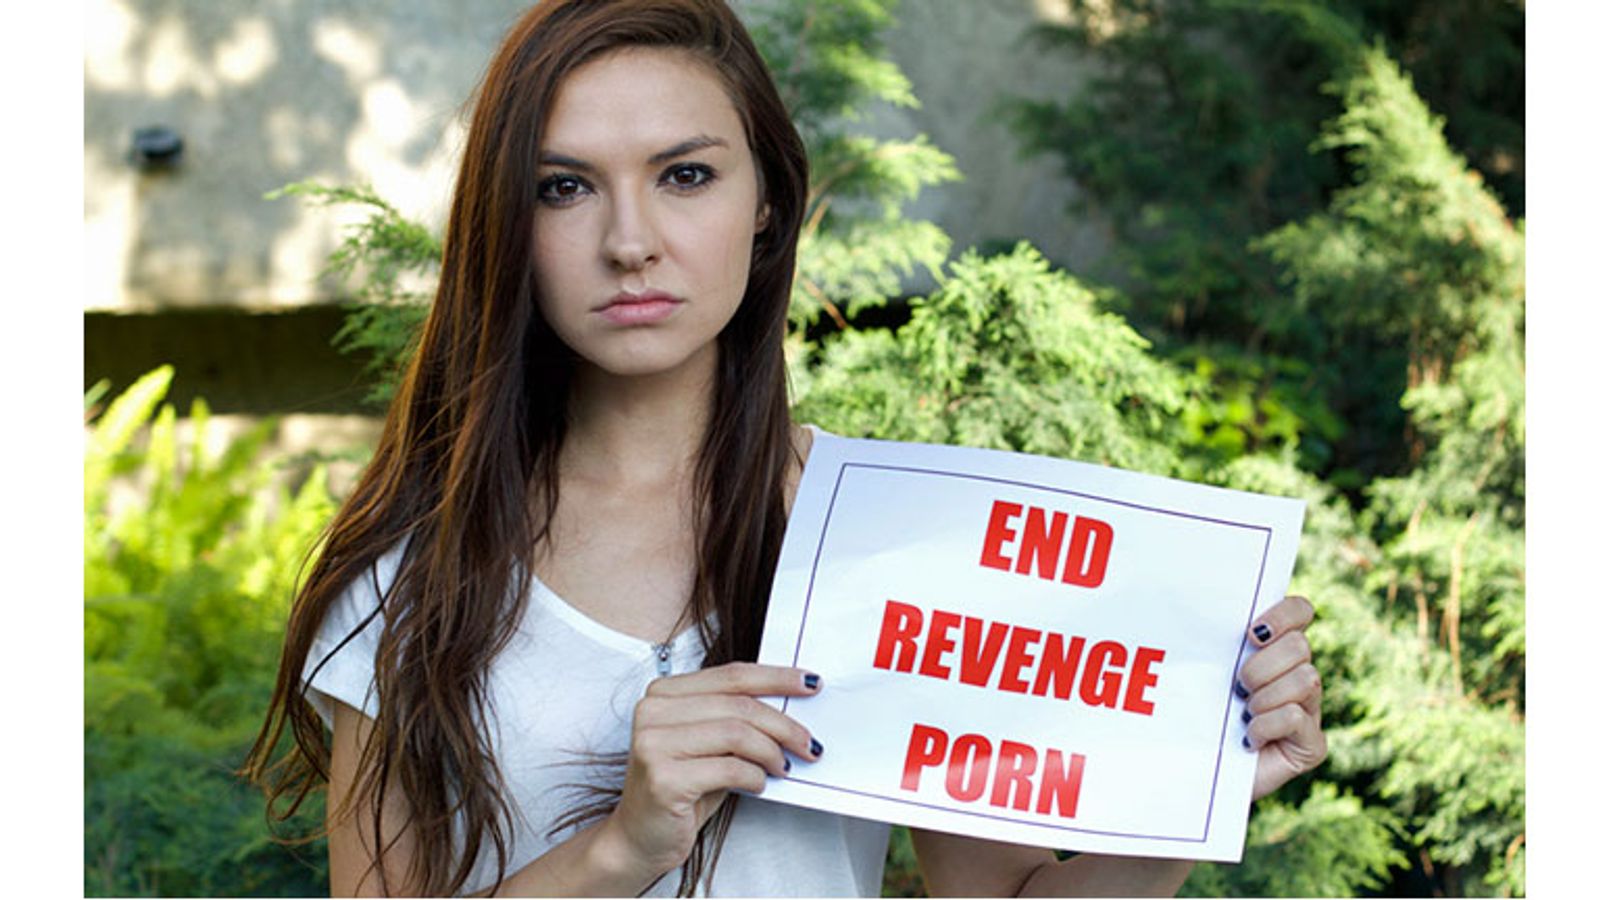 Michigan Woman Gets $500K in Revenge Porn Case